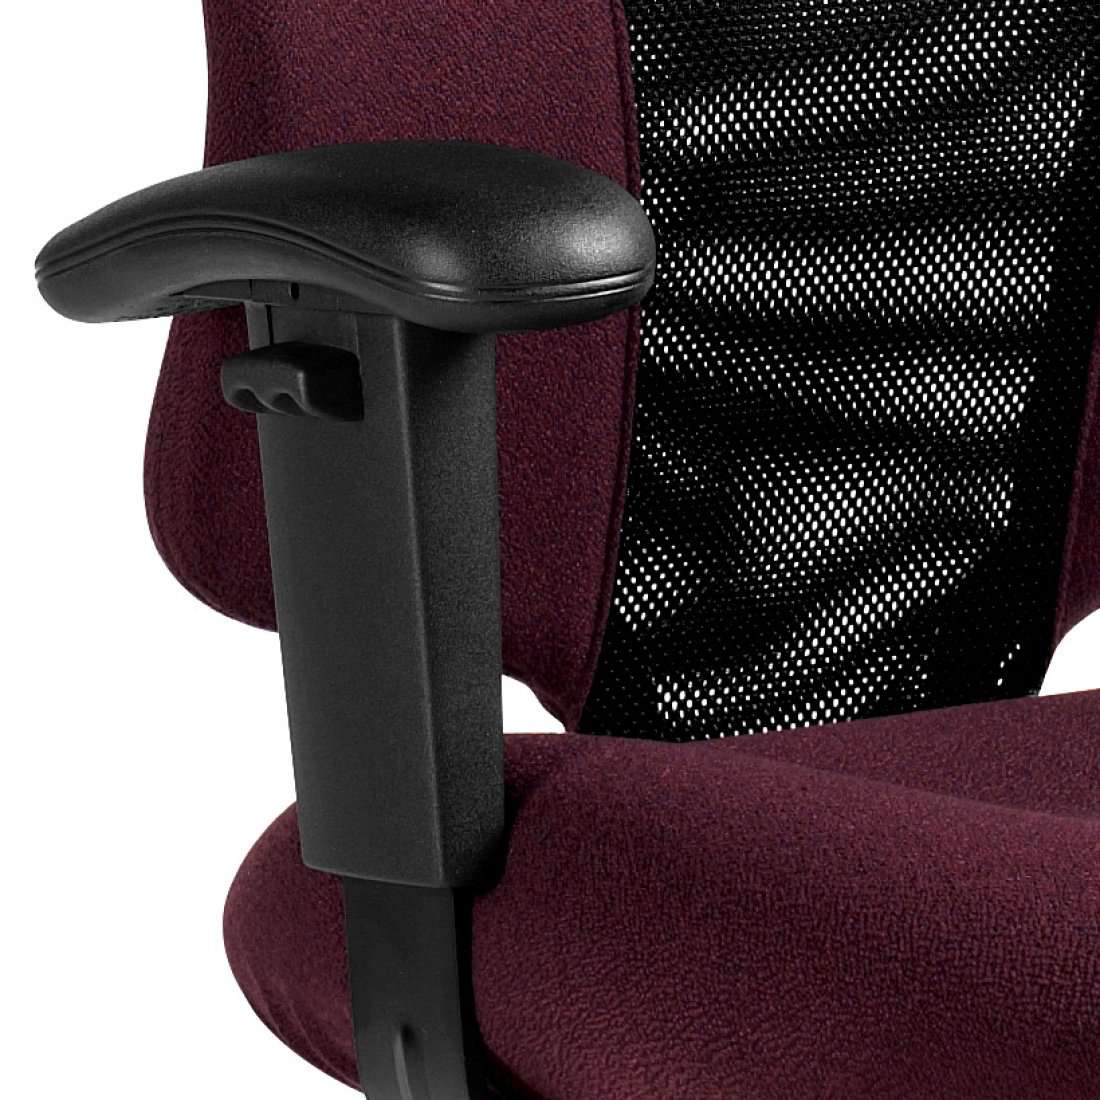 Tye Mesh Medium Back Tilter Chair - Kainosbuy.com